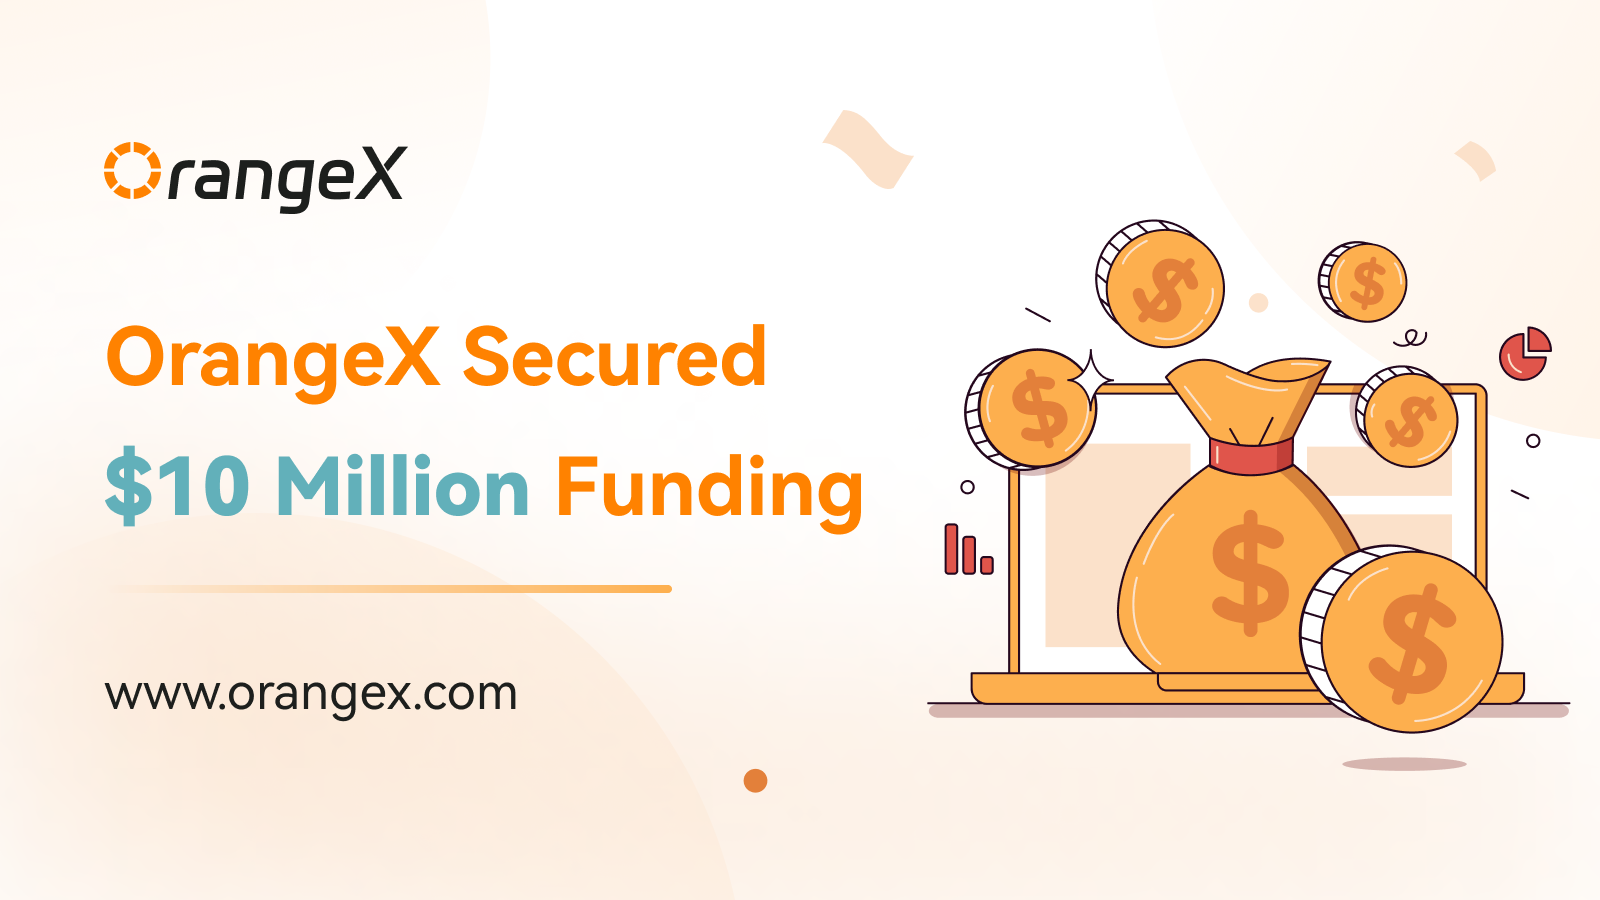 OrangeX secured $10 million funding